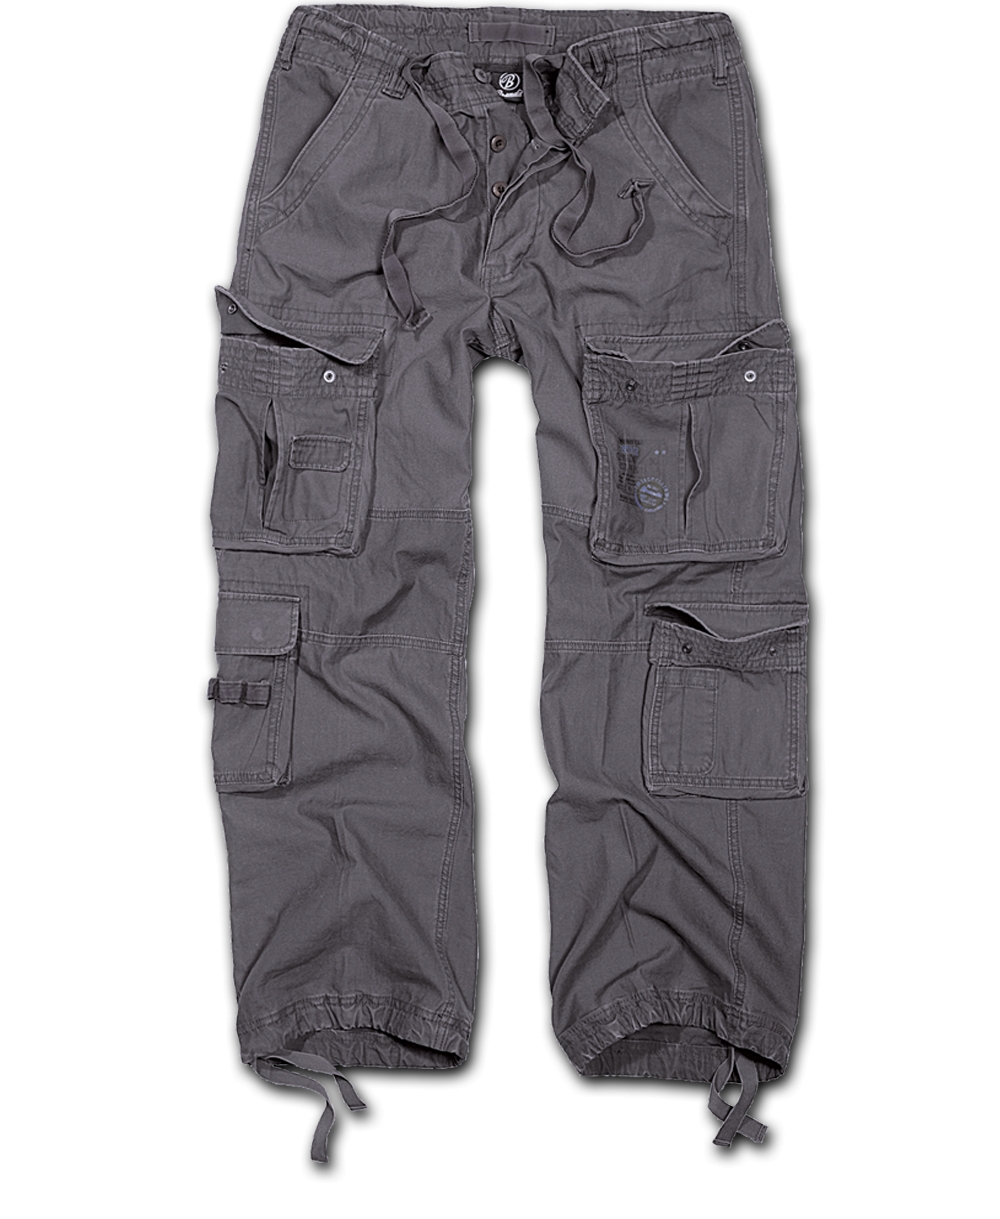 Kalhoty Brandit Pure Vintage - antracitové, 3XL